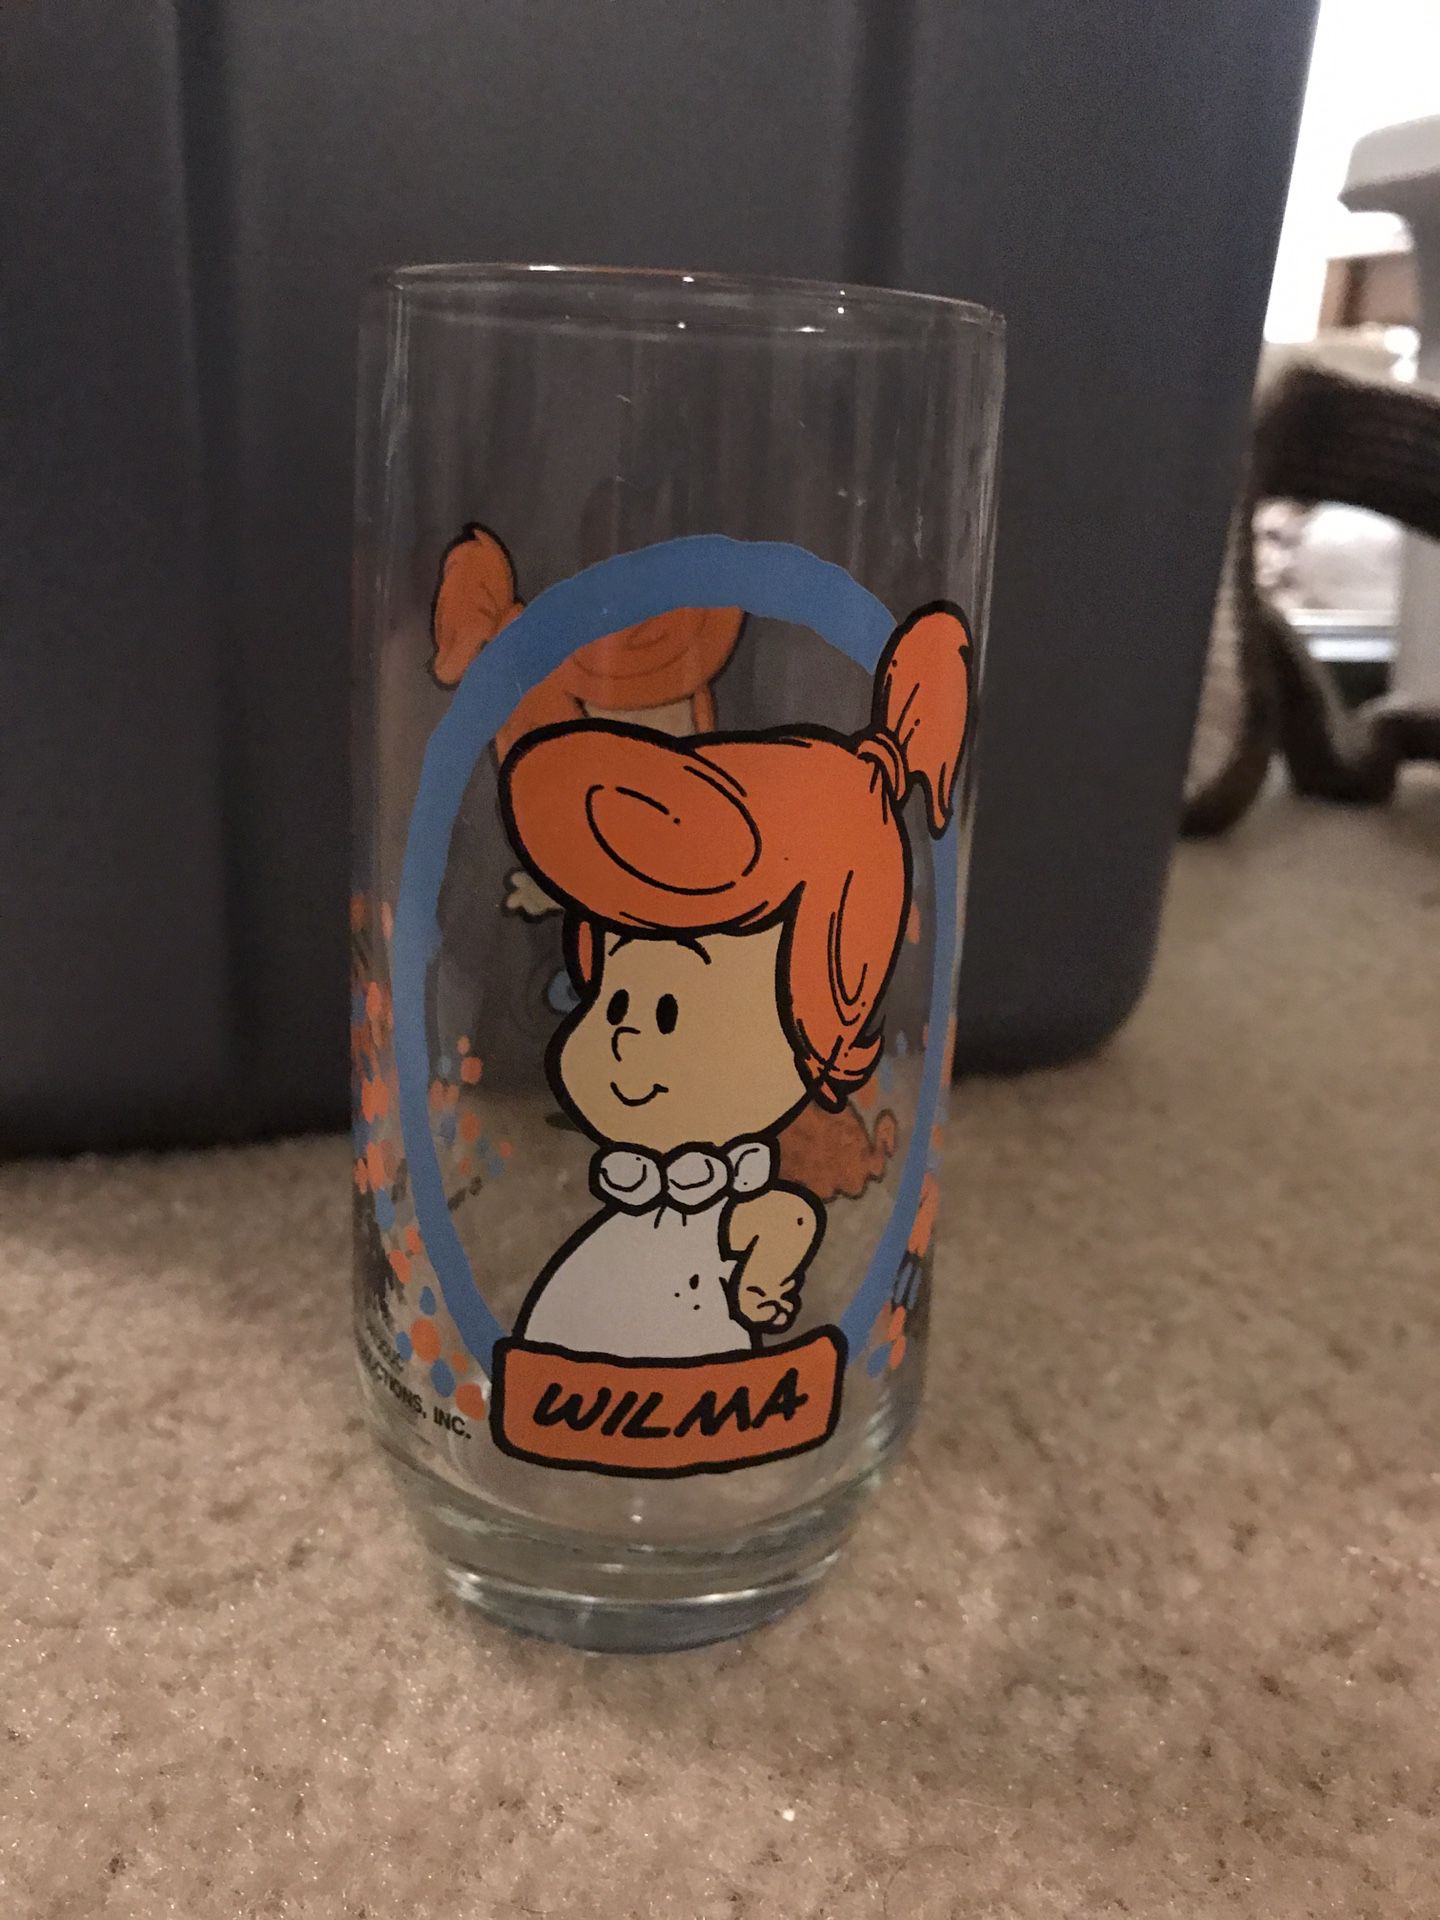 1986 WILMA of the Flintstones Collectible glass